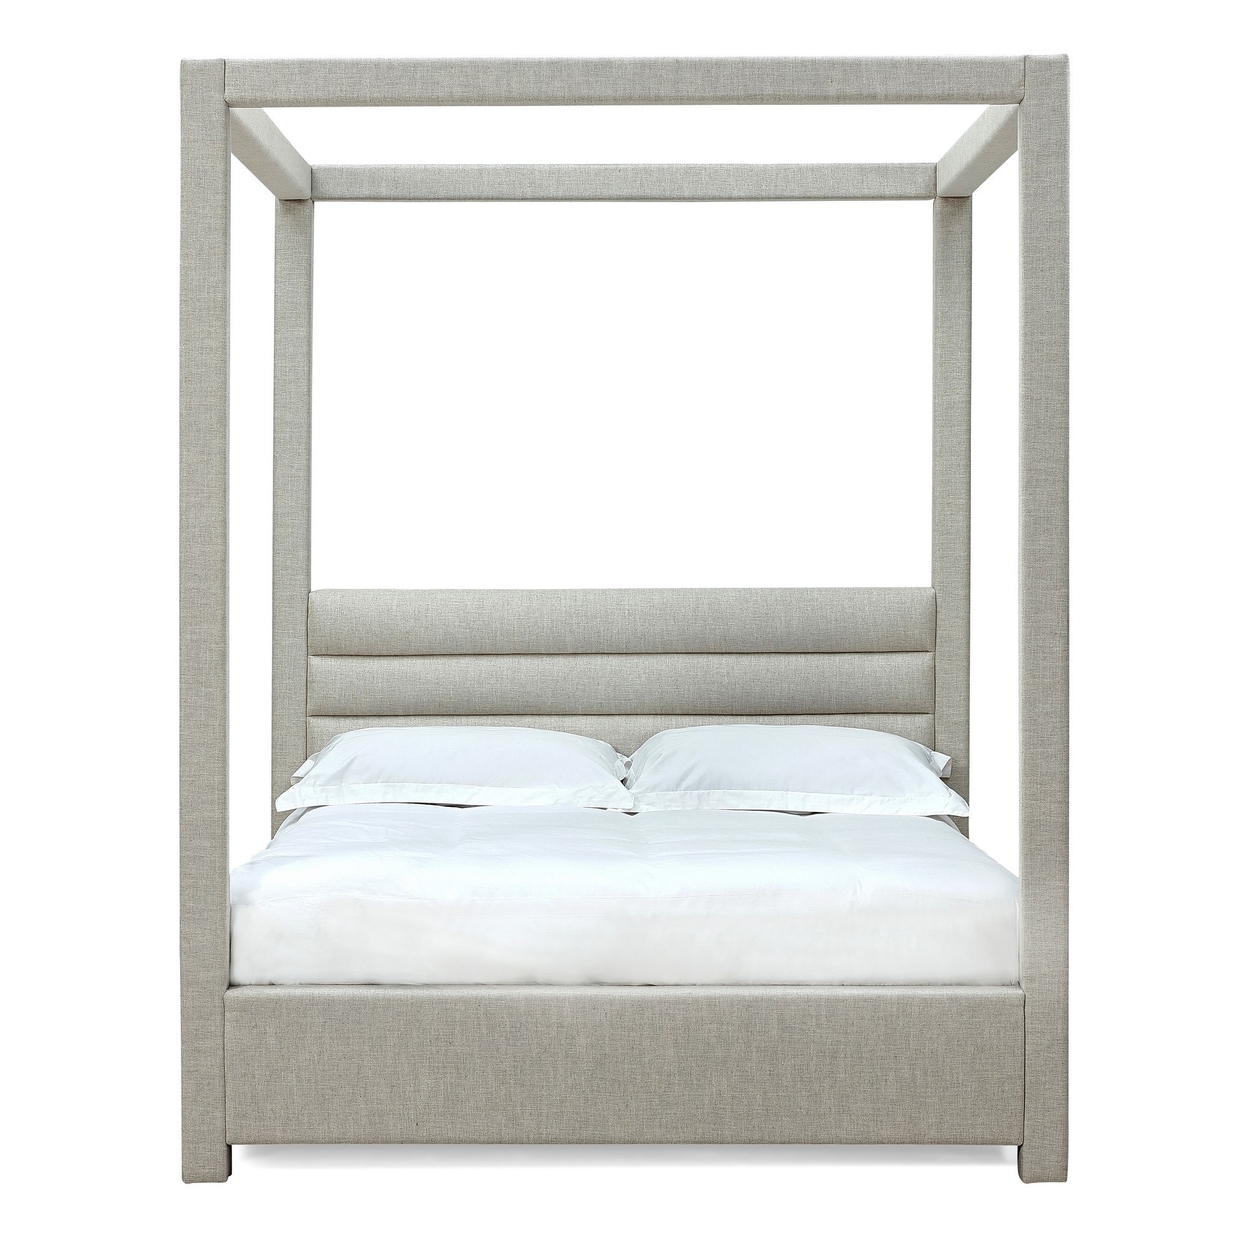 Riu Queen Size Canopy Bed, Panel Headboard, Tufted Gray Linen Upholstery- Saltoro Sherpi